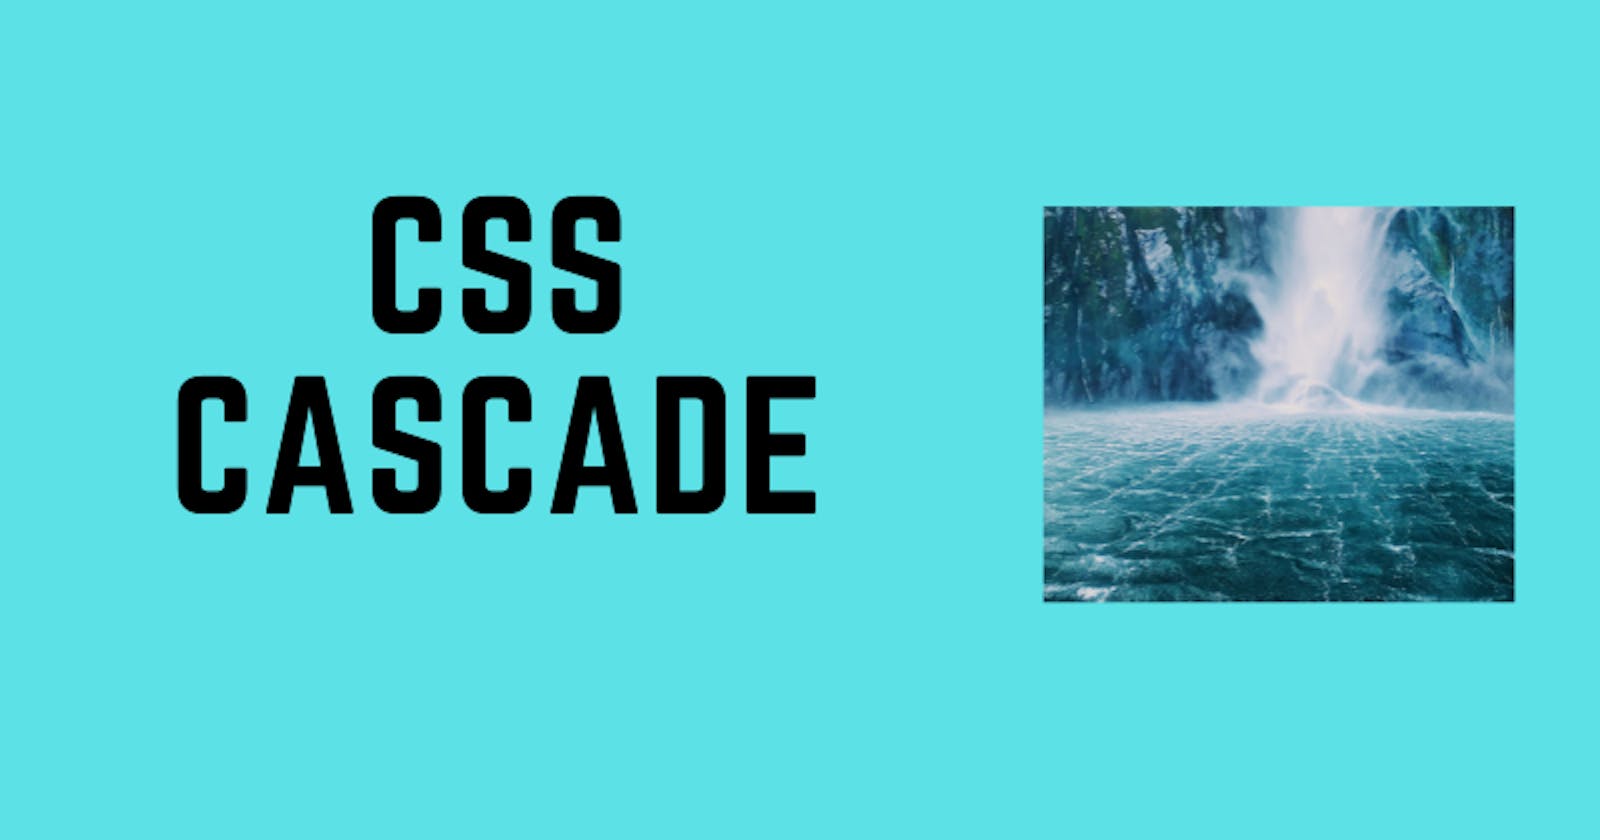 The CSS Cascade Algorithm Explained